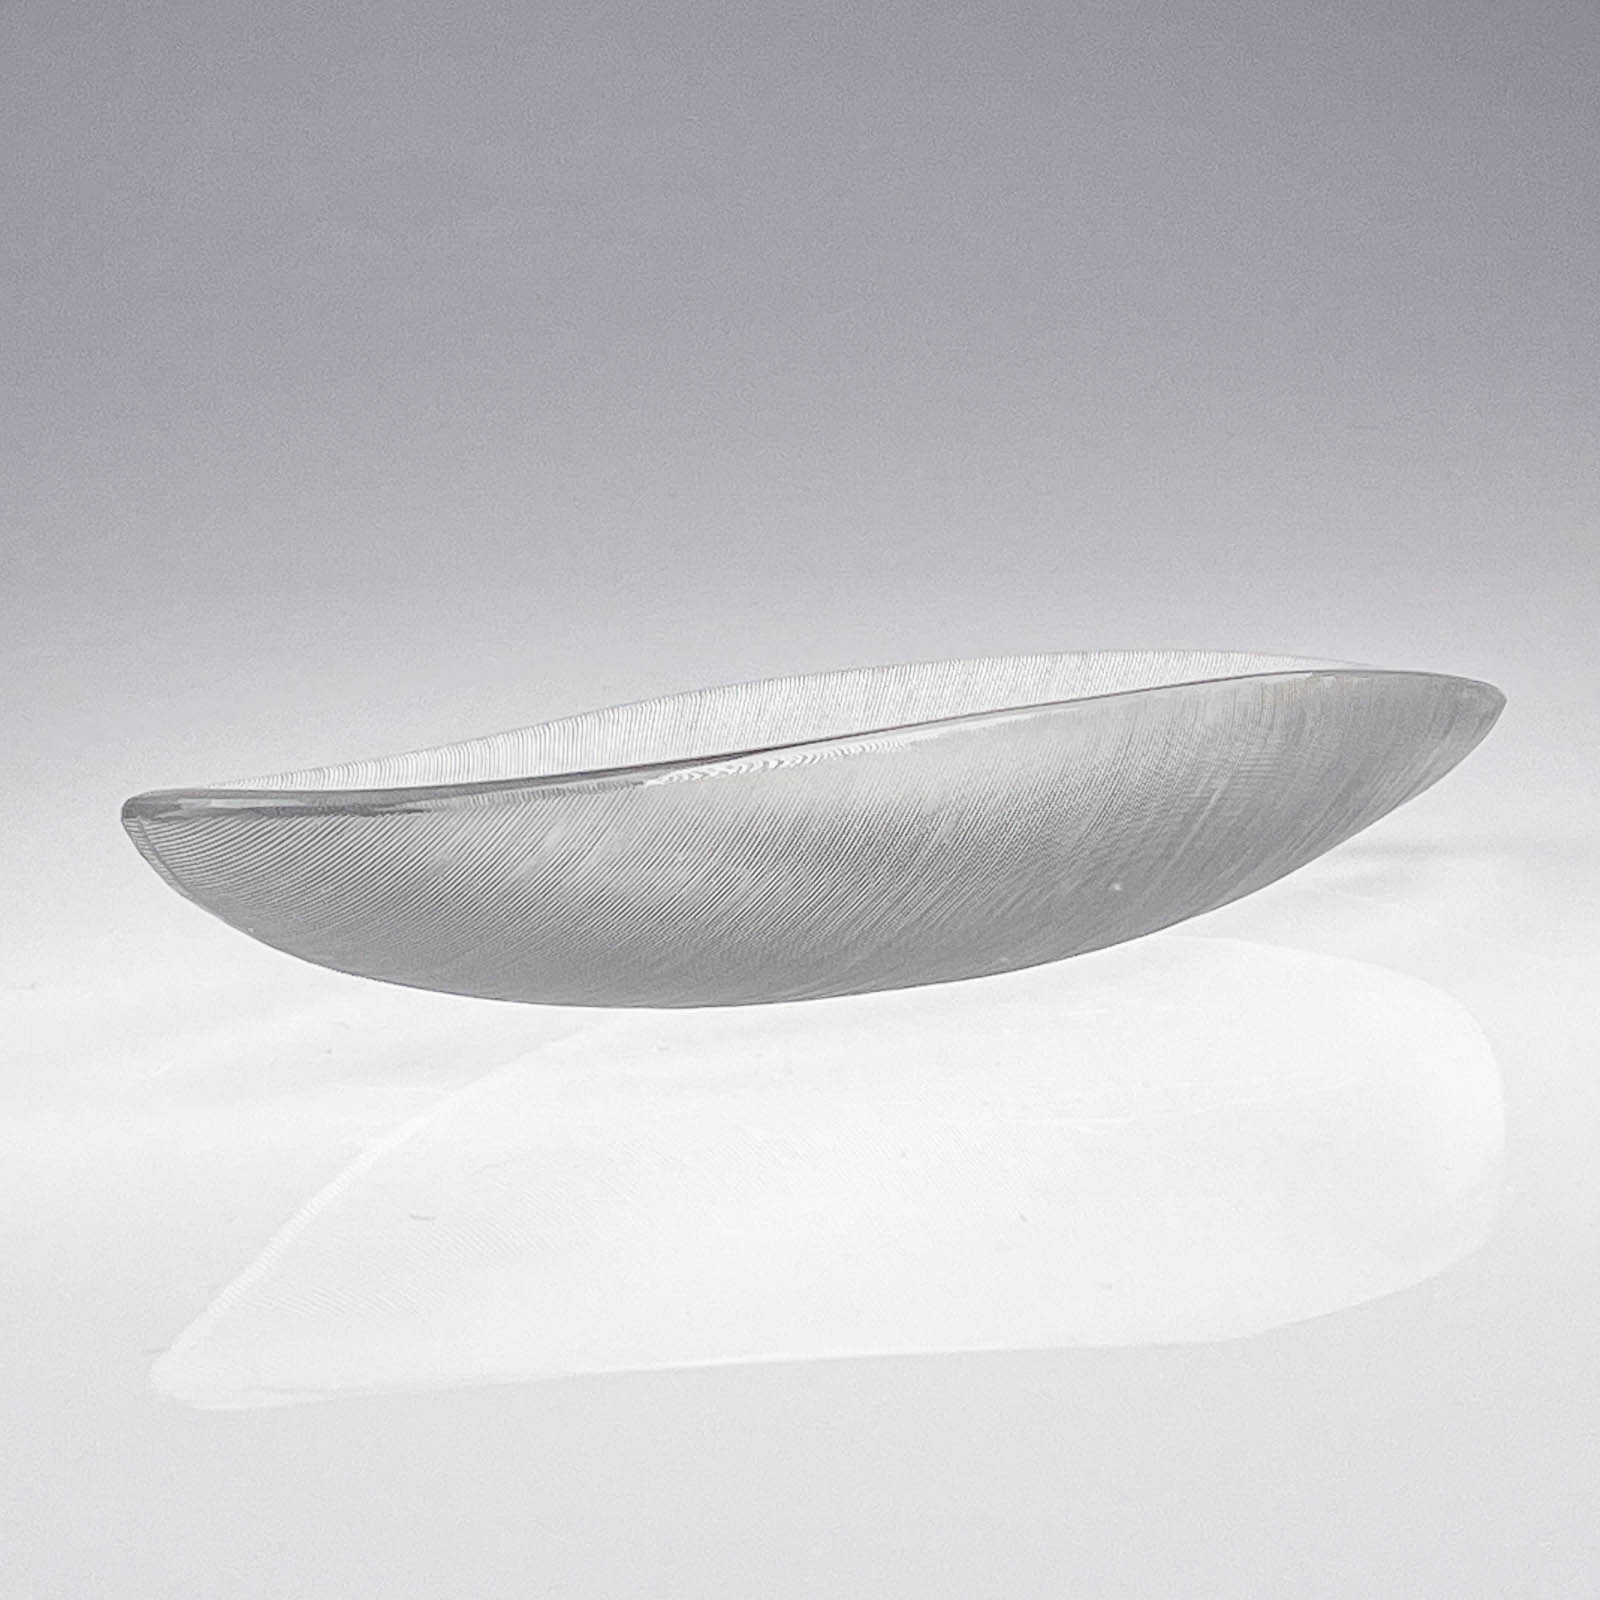 Tapio Wirkkala - Crystal Art-Object "Feather" model 3369 = 3869 - Iittala Finland 1955